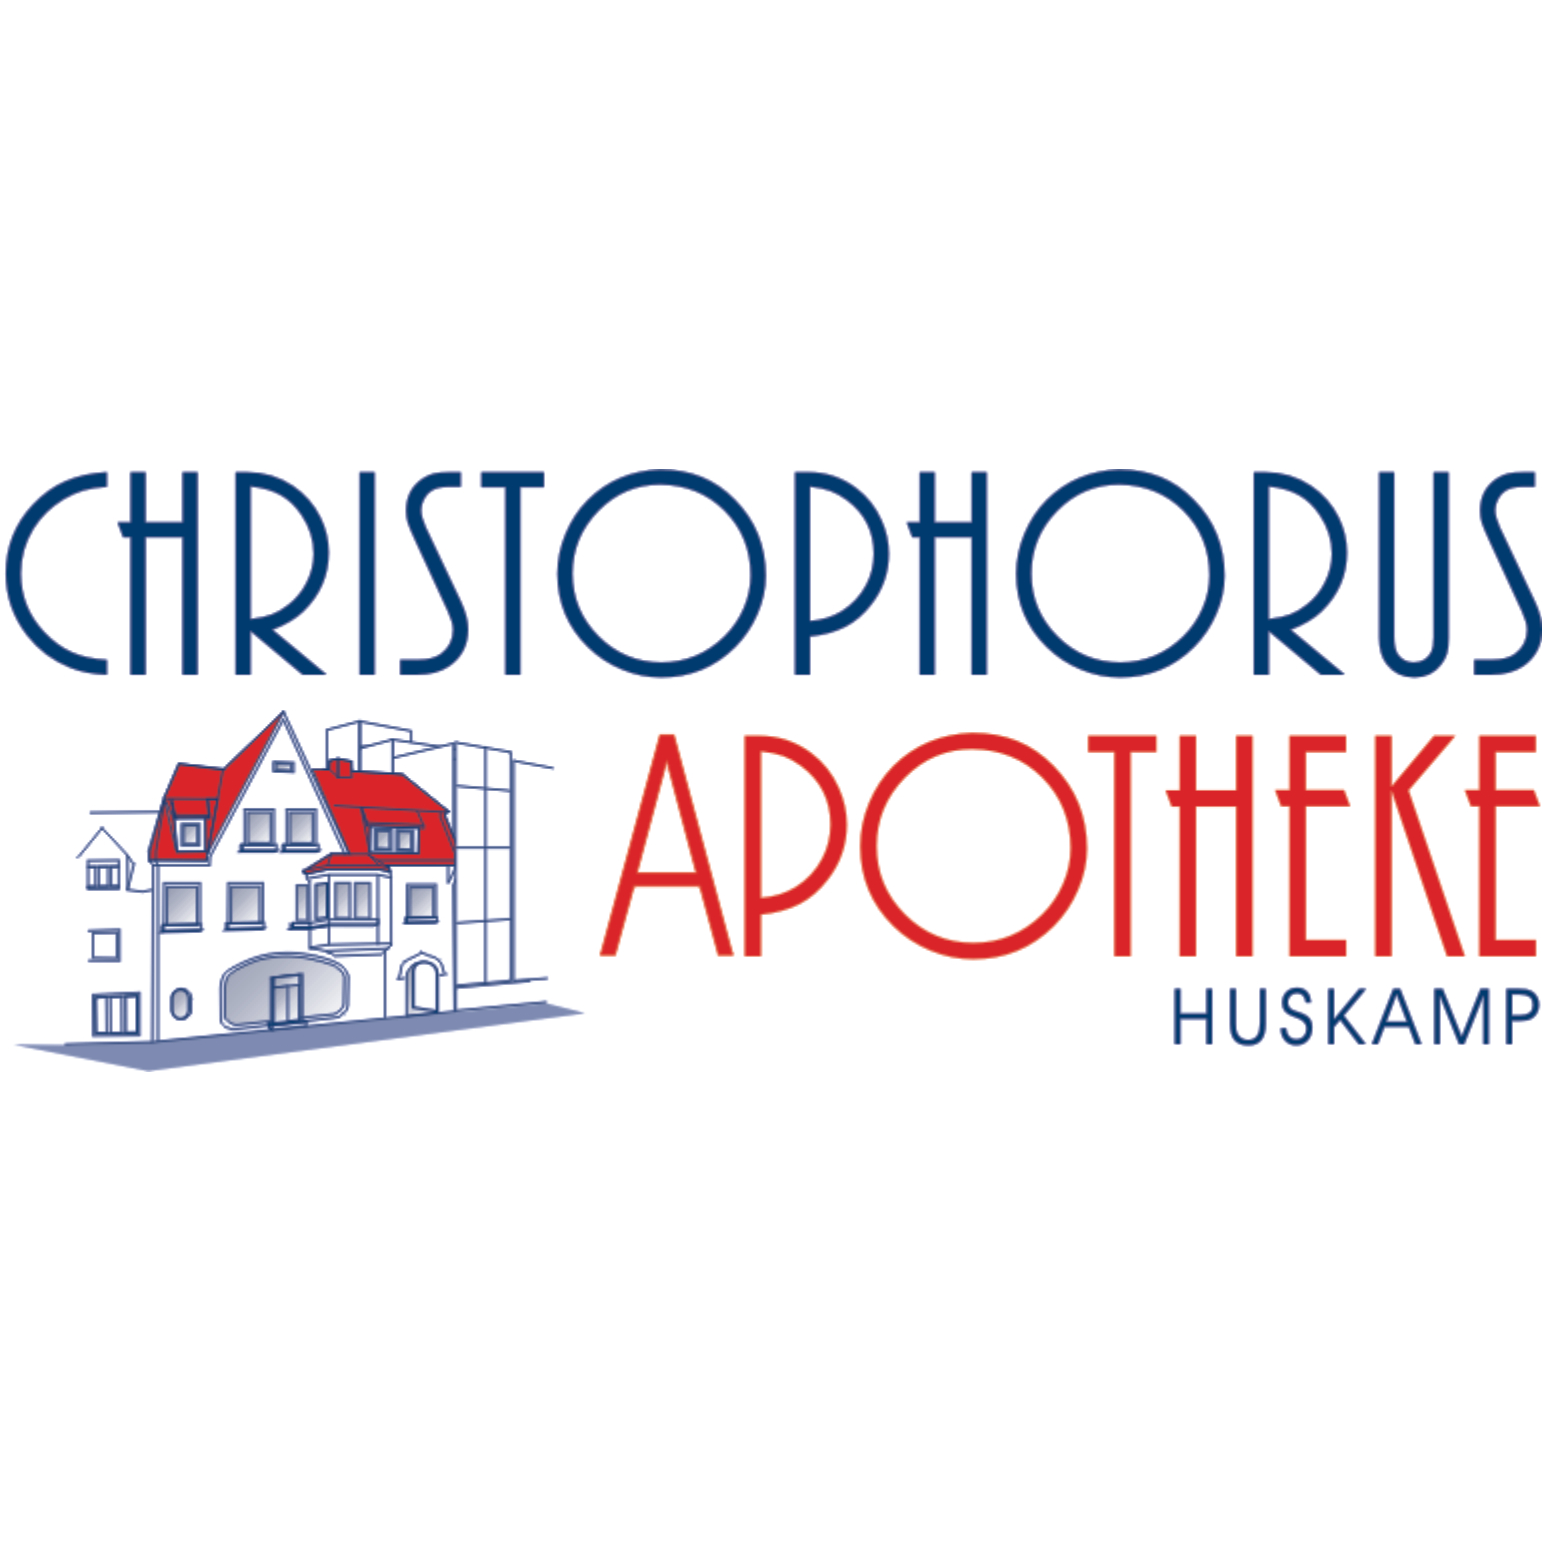 Logo der Christophorus-Apotheke